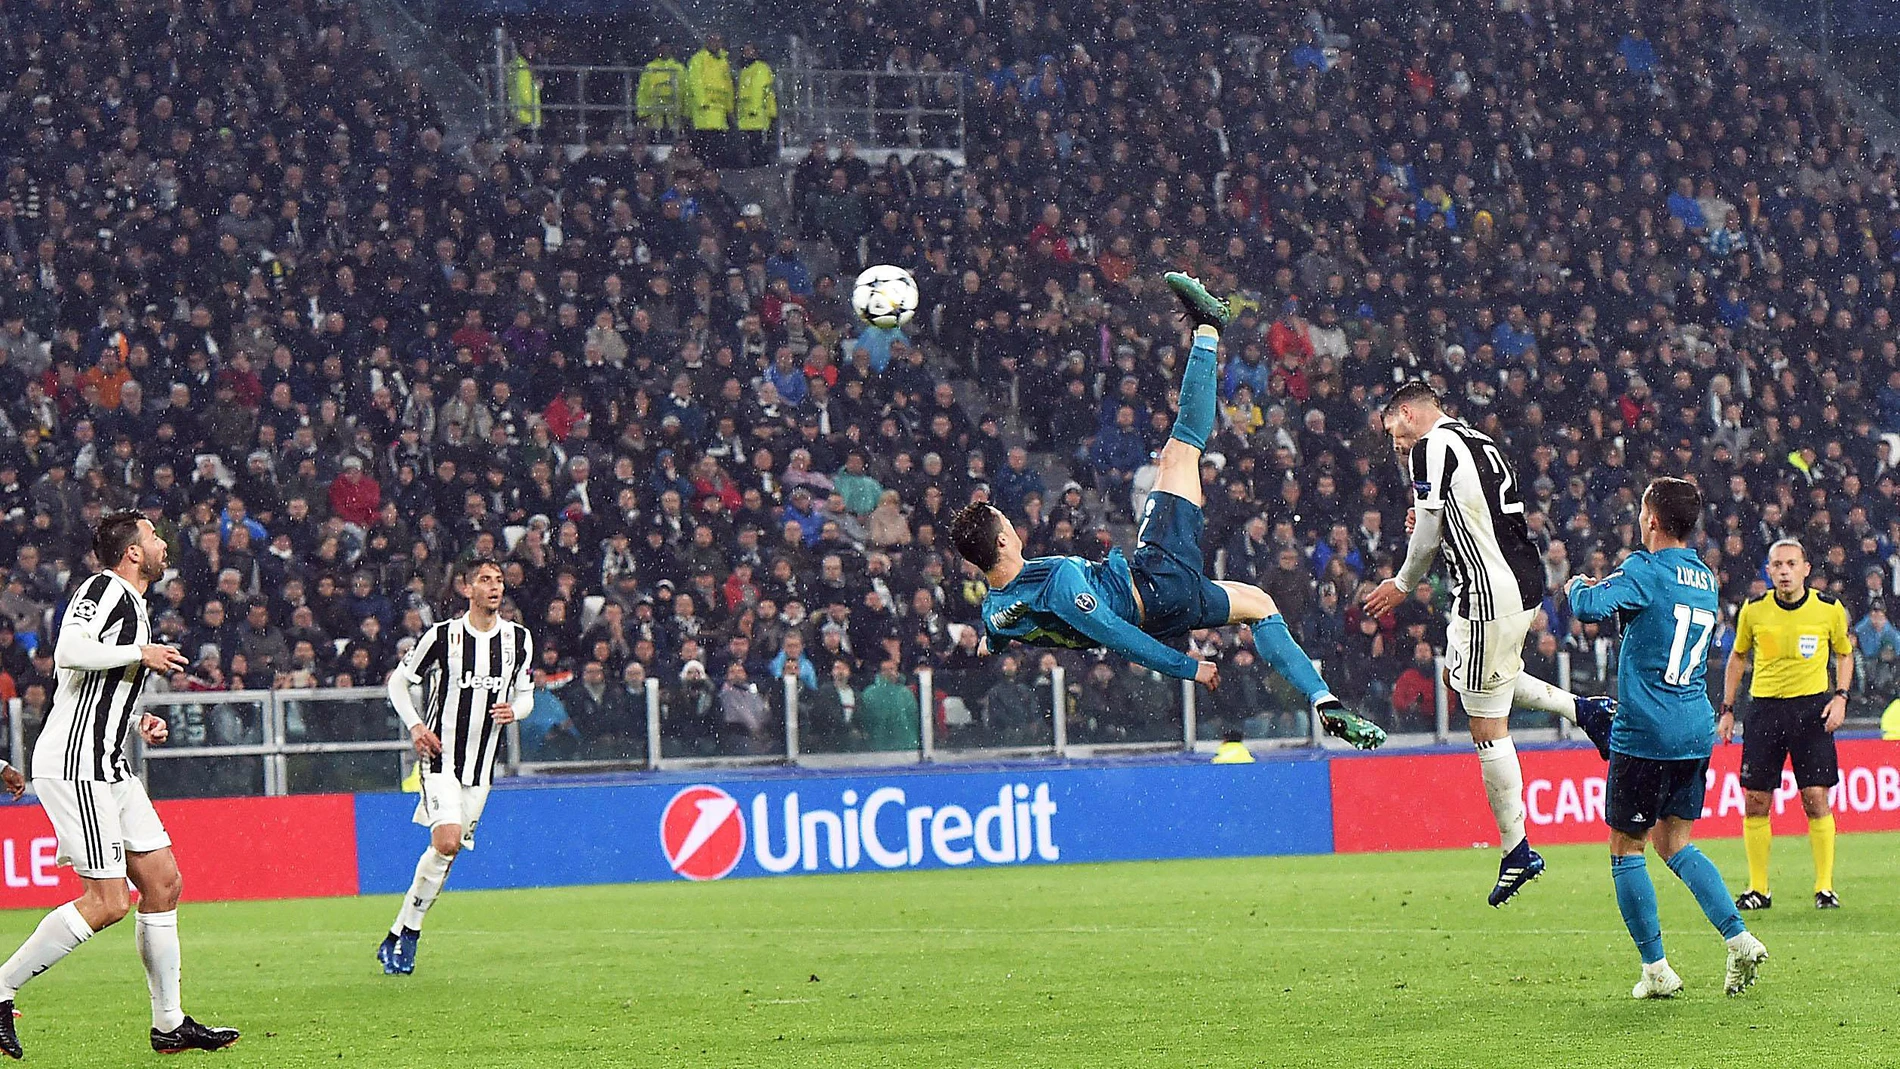 Cristiano Ronaldo marca de chilena ante la Juventus